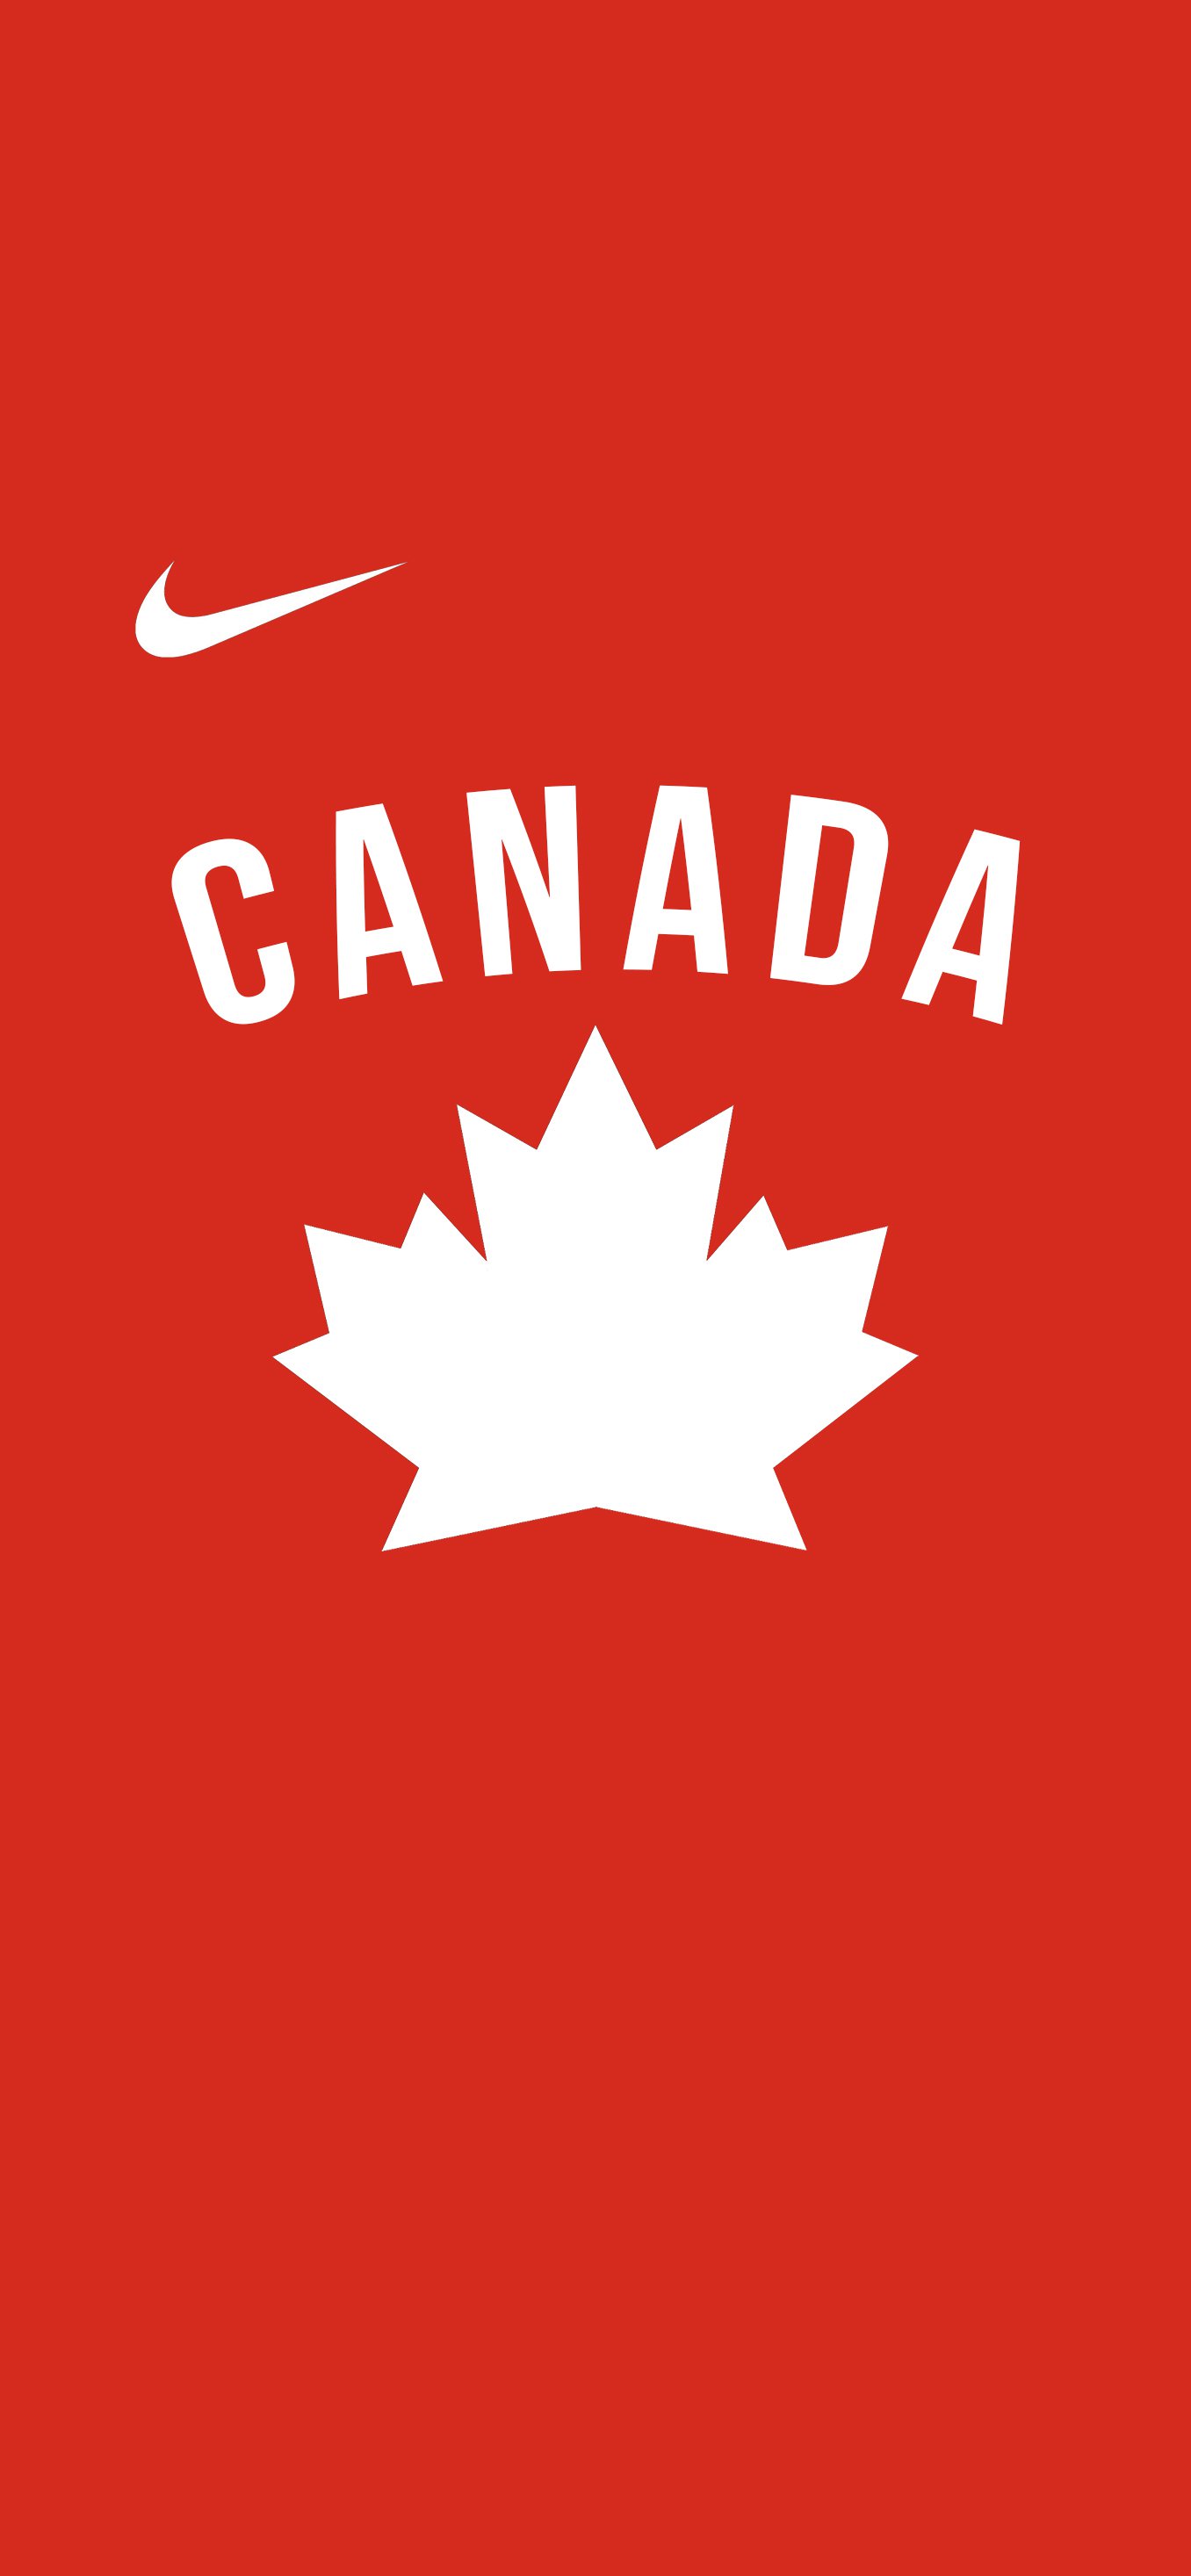 Team Canada WJC phone wallpaper: TeamCanada